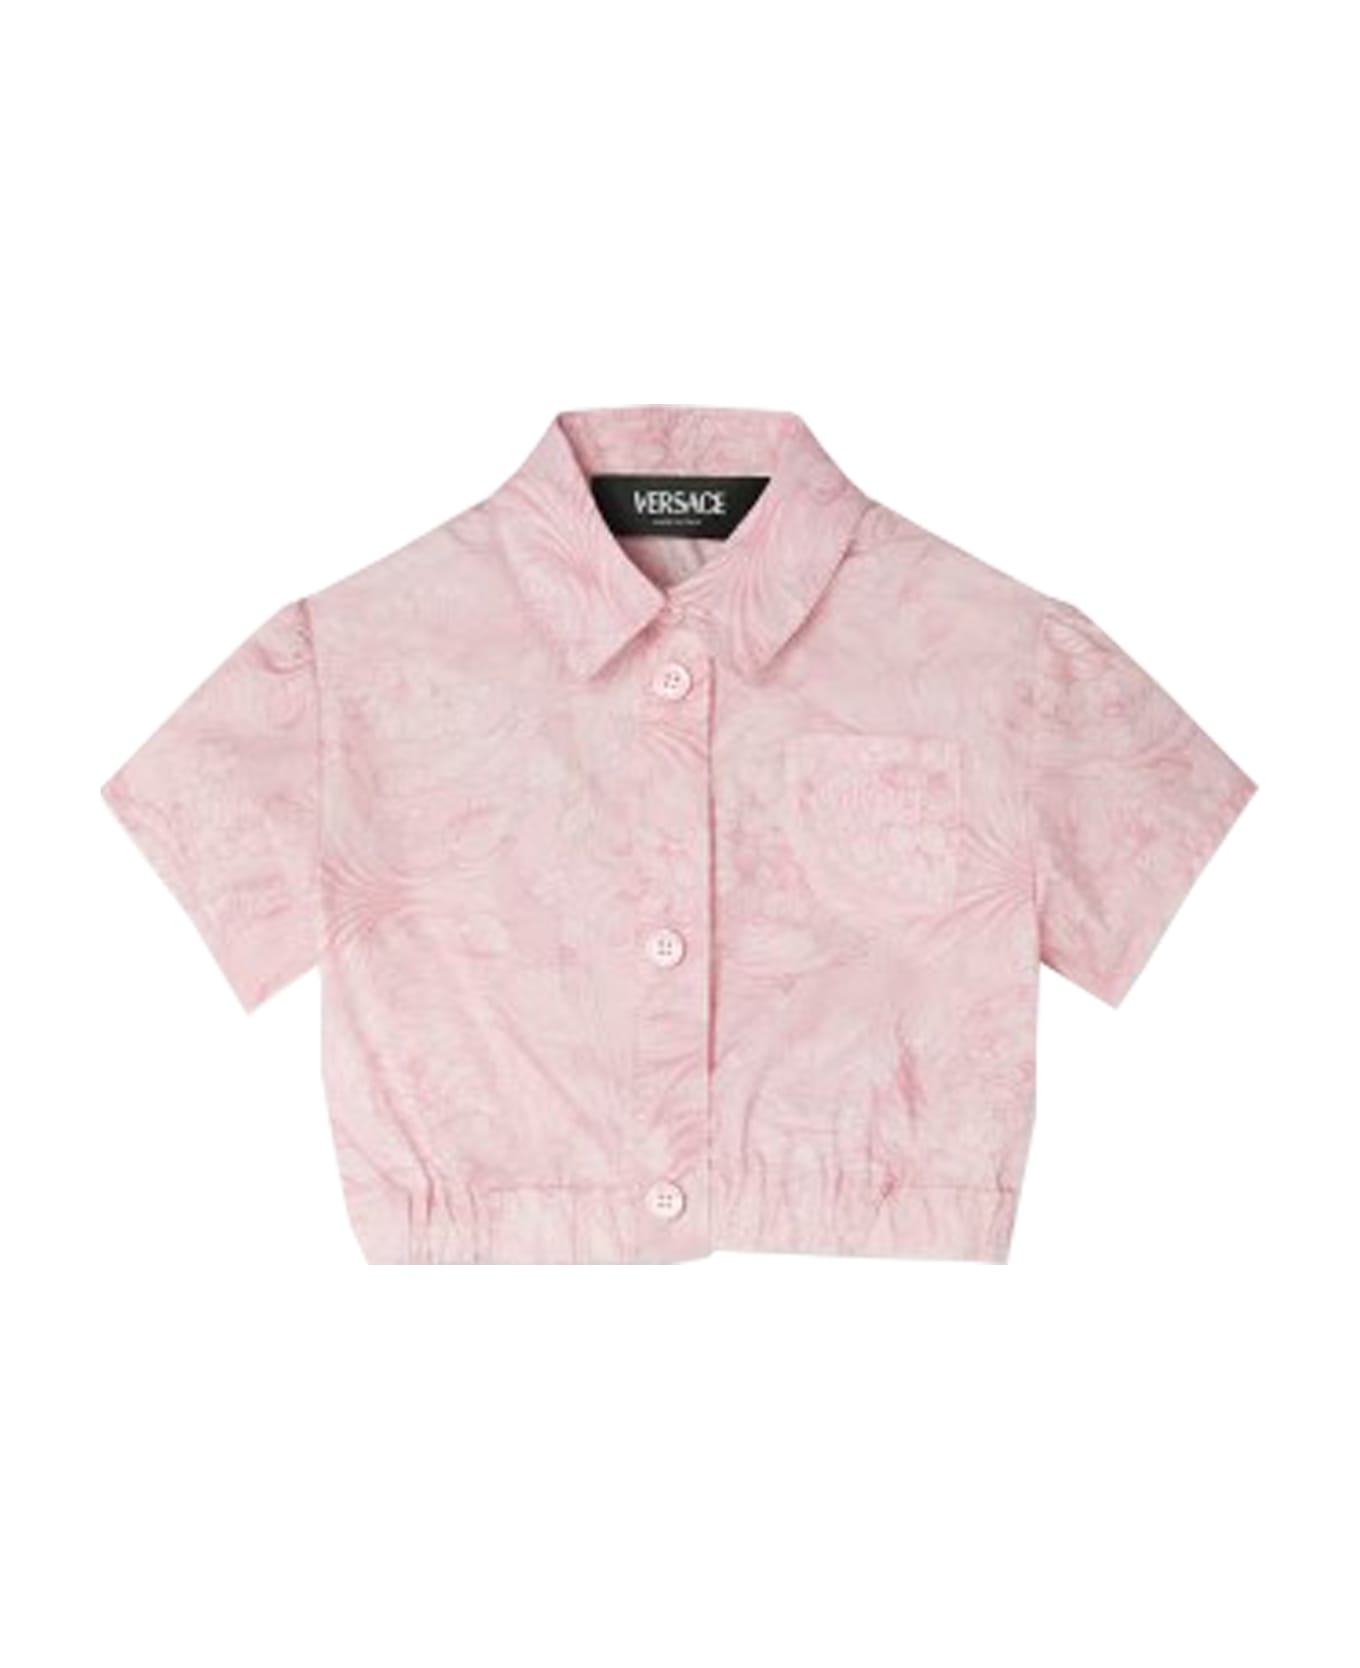 Versace Shirt - Rose